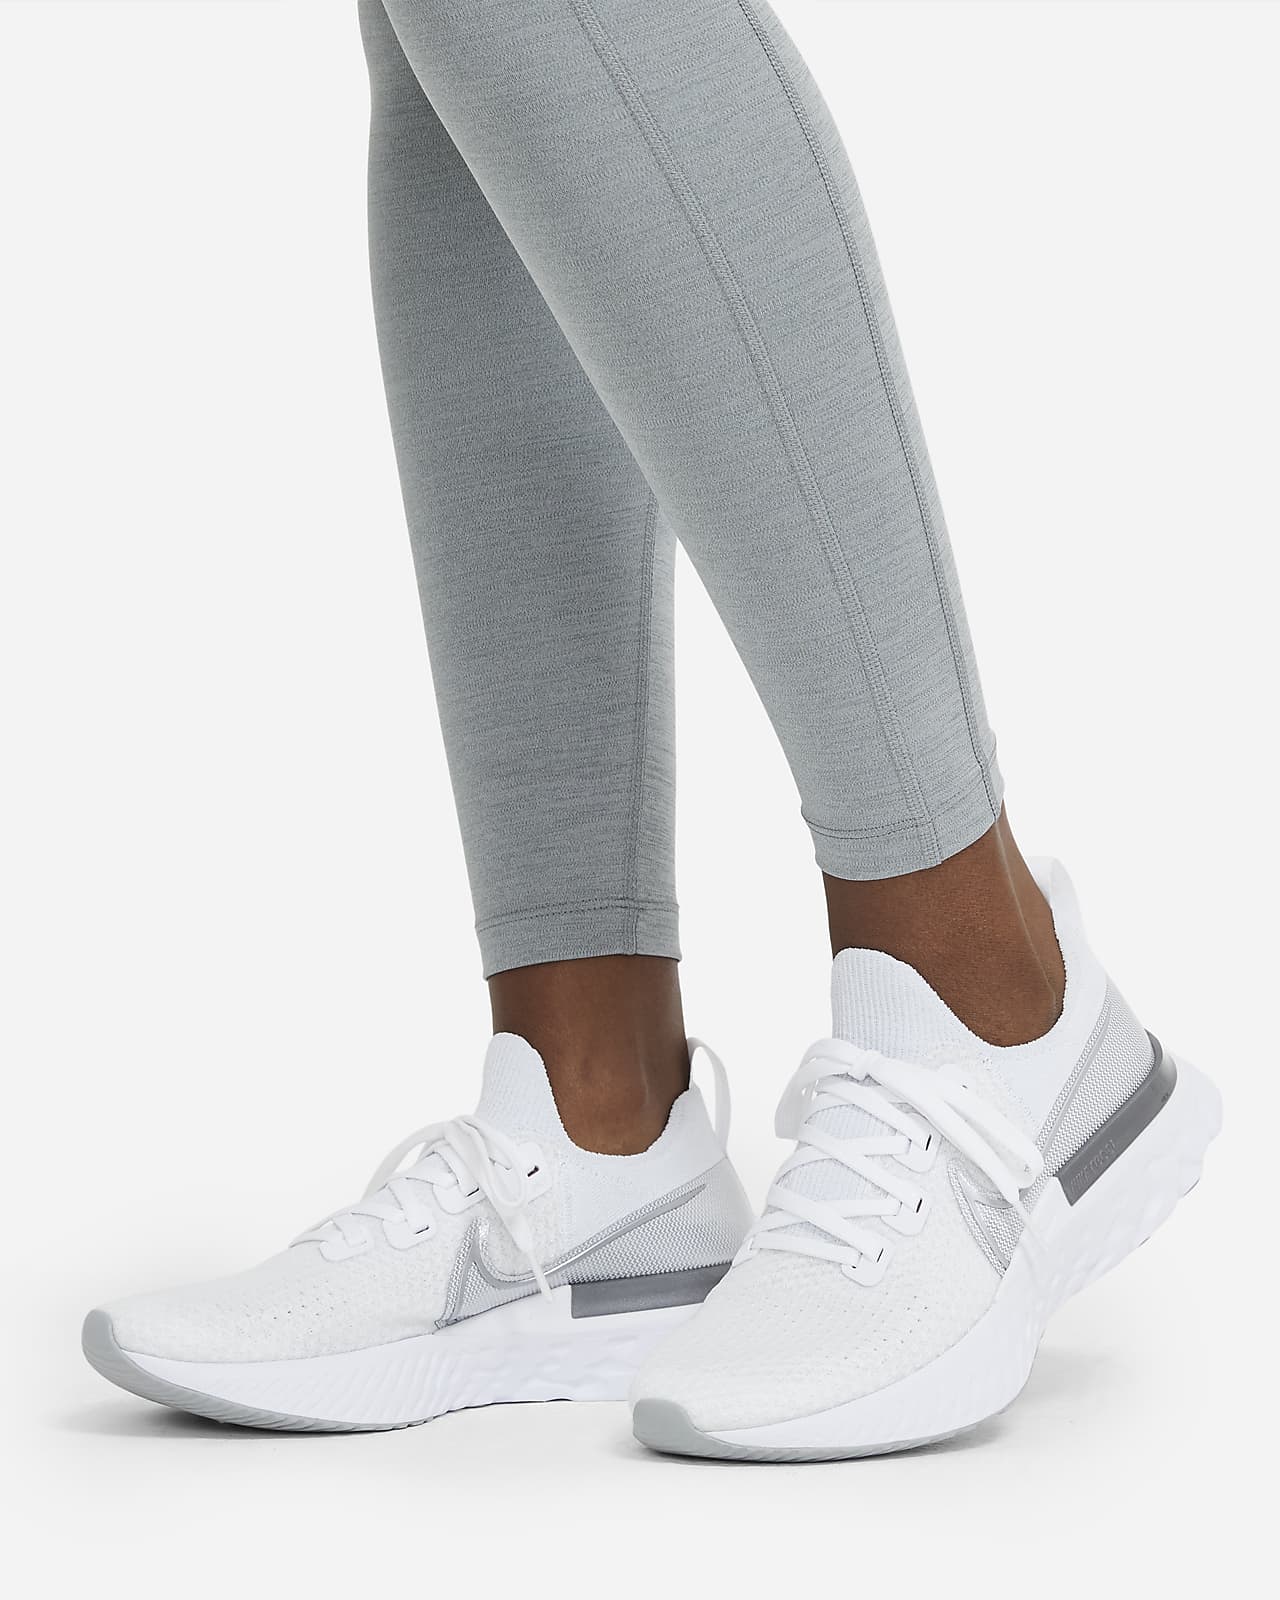 Nike Running Epic Fast Legging - Grey